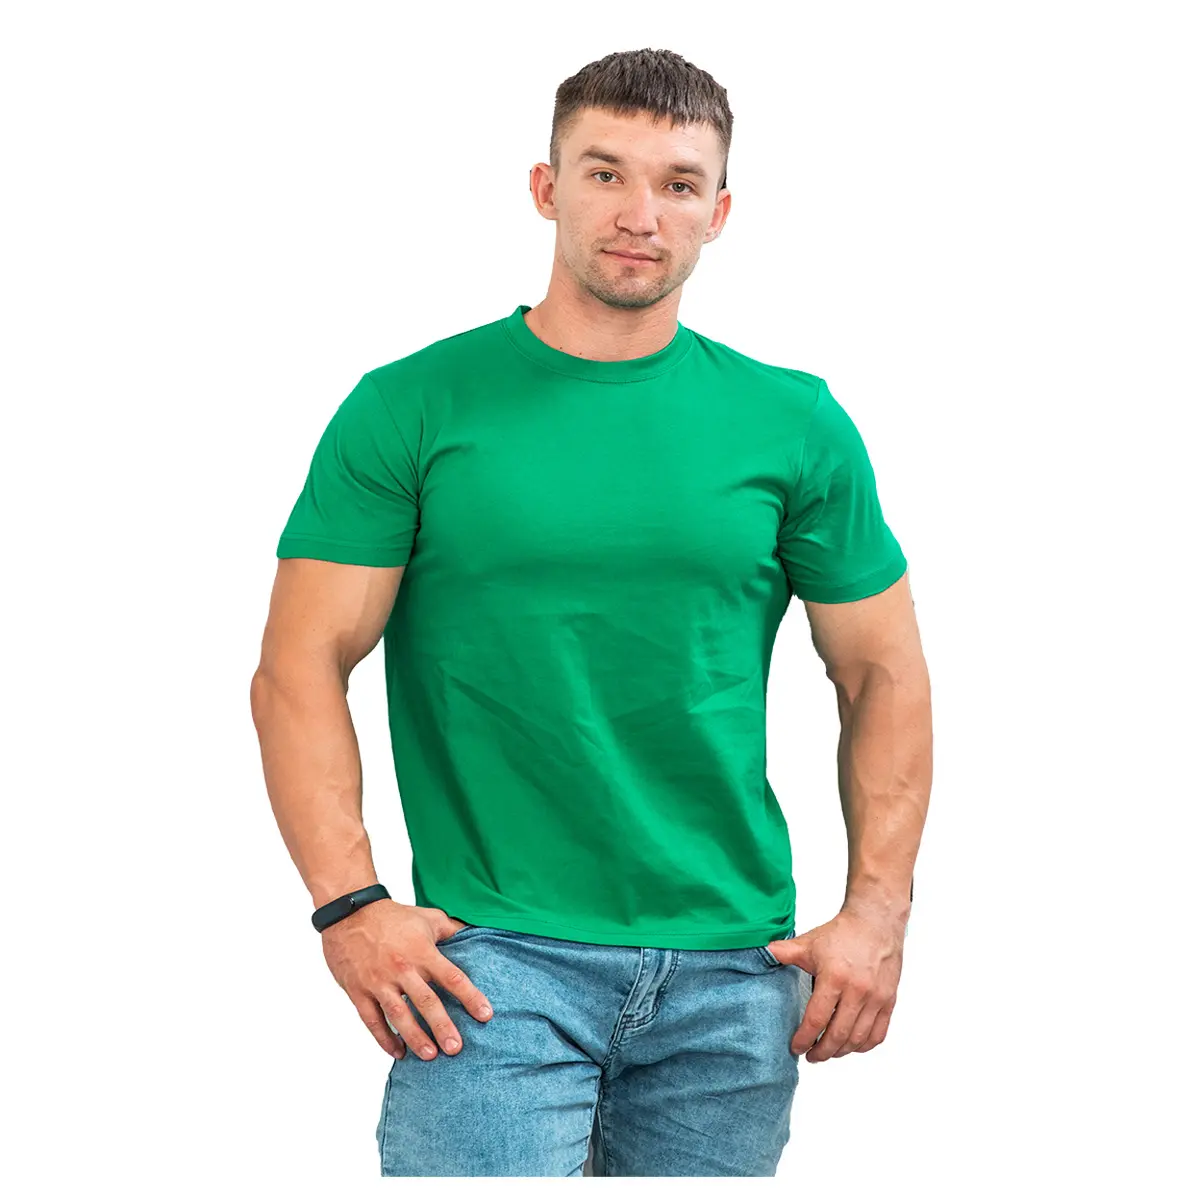 Kaus pria berkualitas tinggi terbuat dari 100% katun Harga produsen pakaian katun untuk dijual